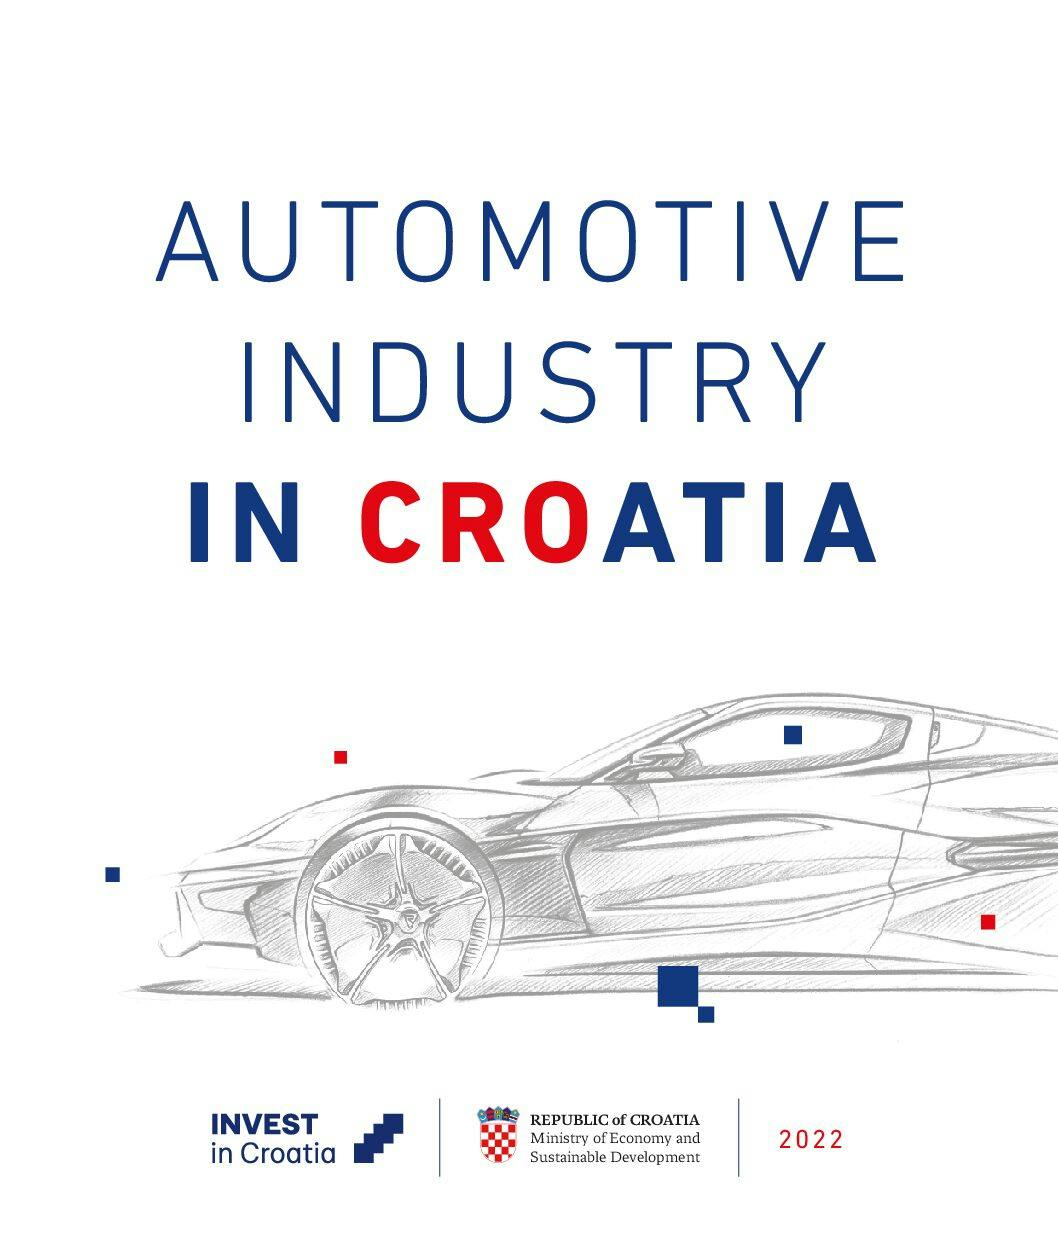 Automotive industry in Croatia